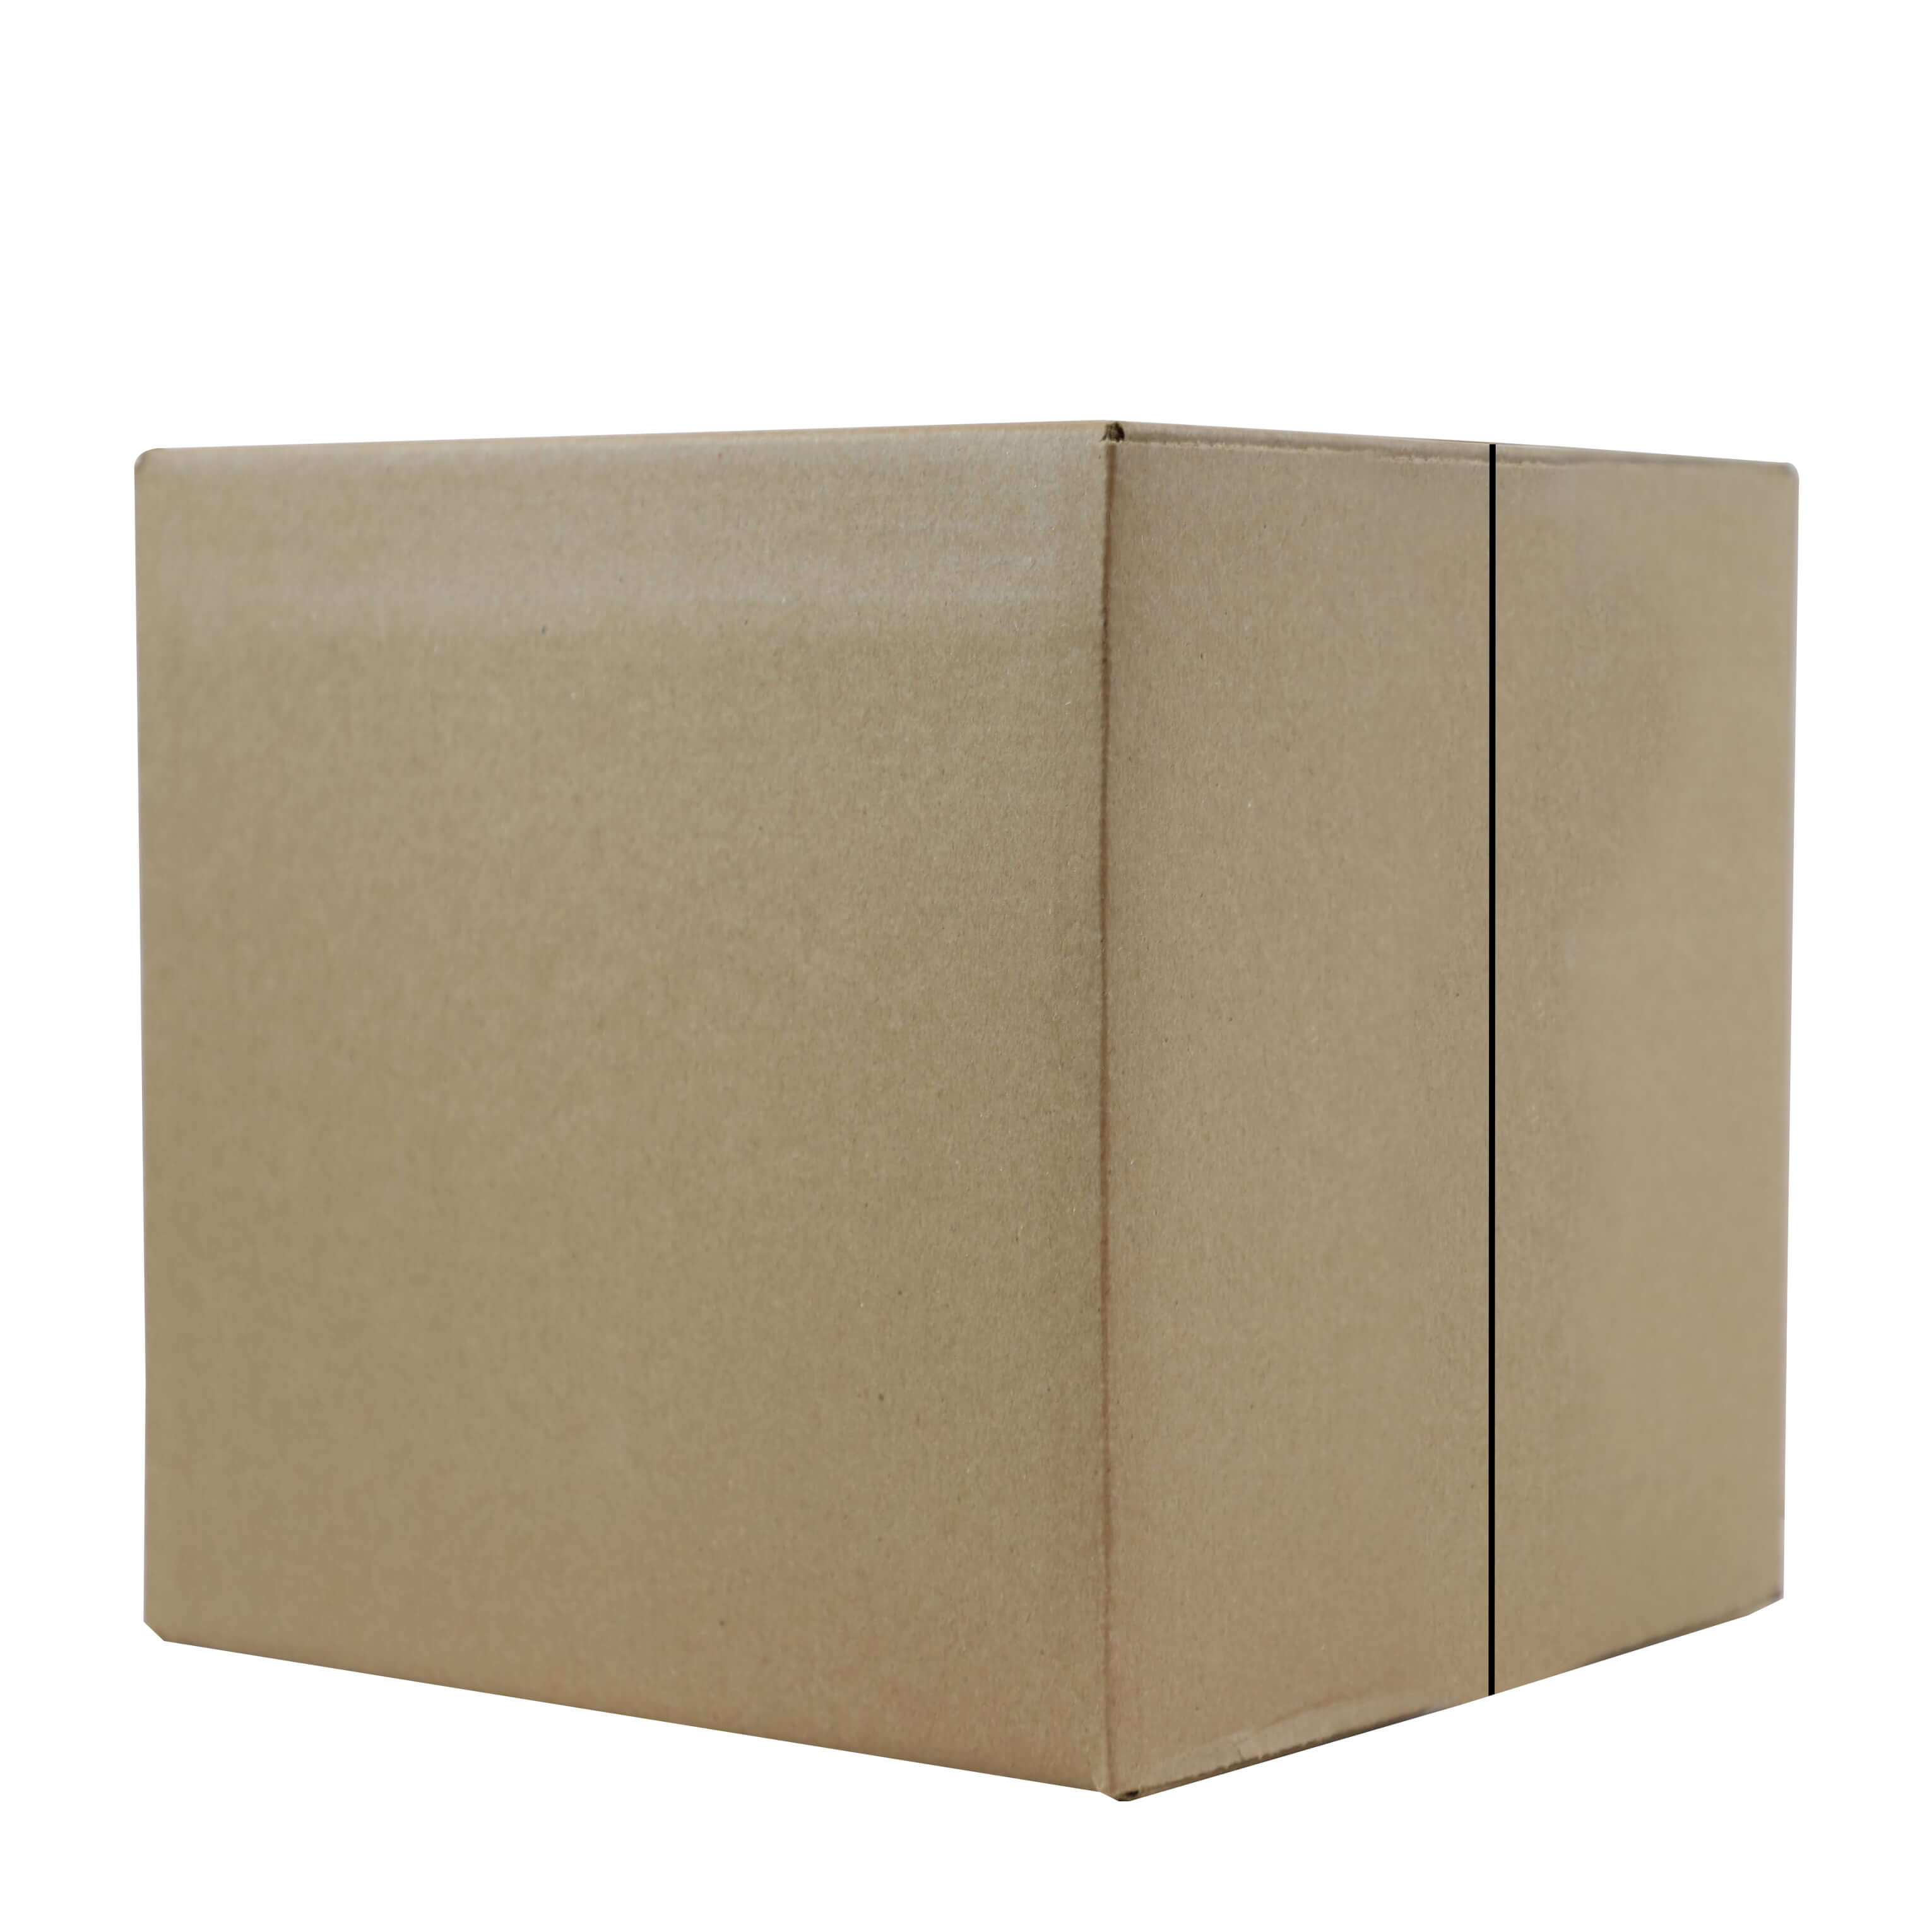 Cube Box 20 x 20 x 20 cm